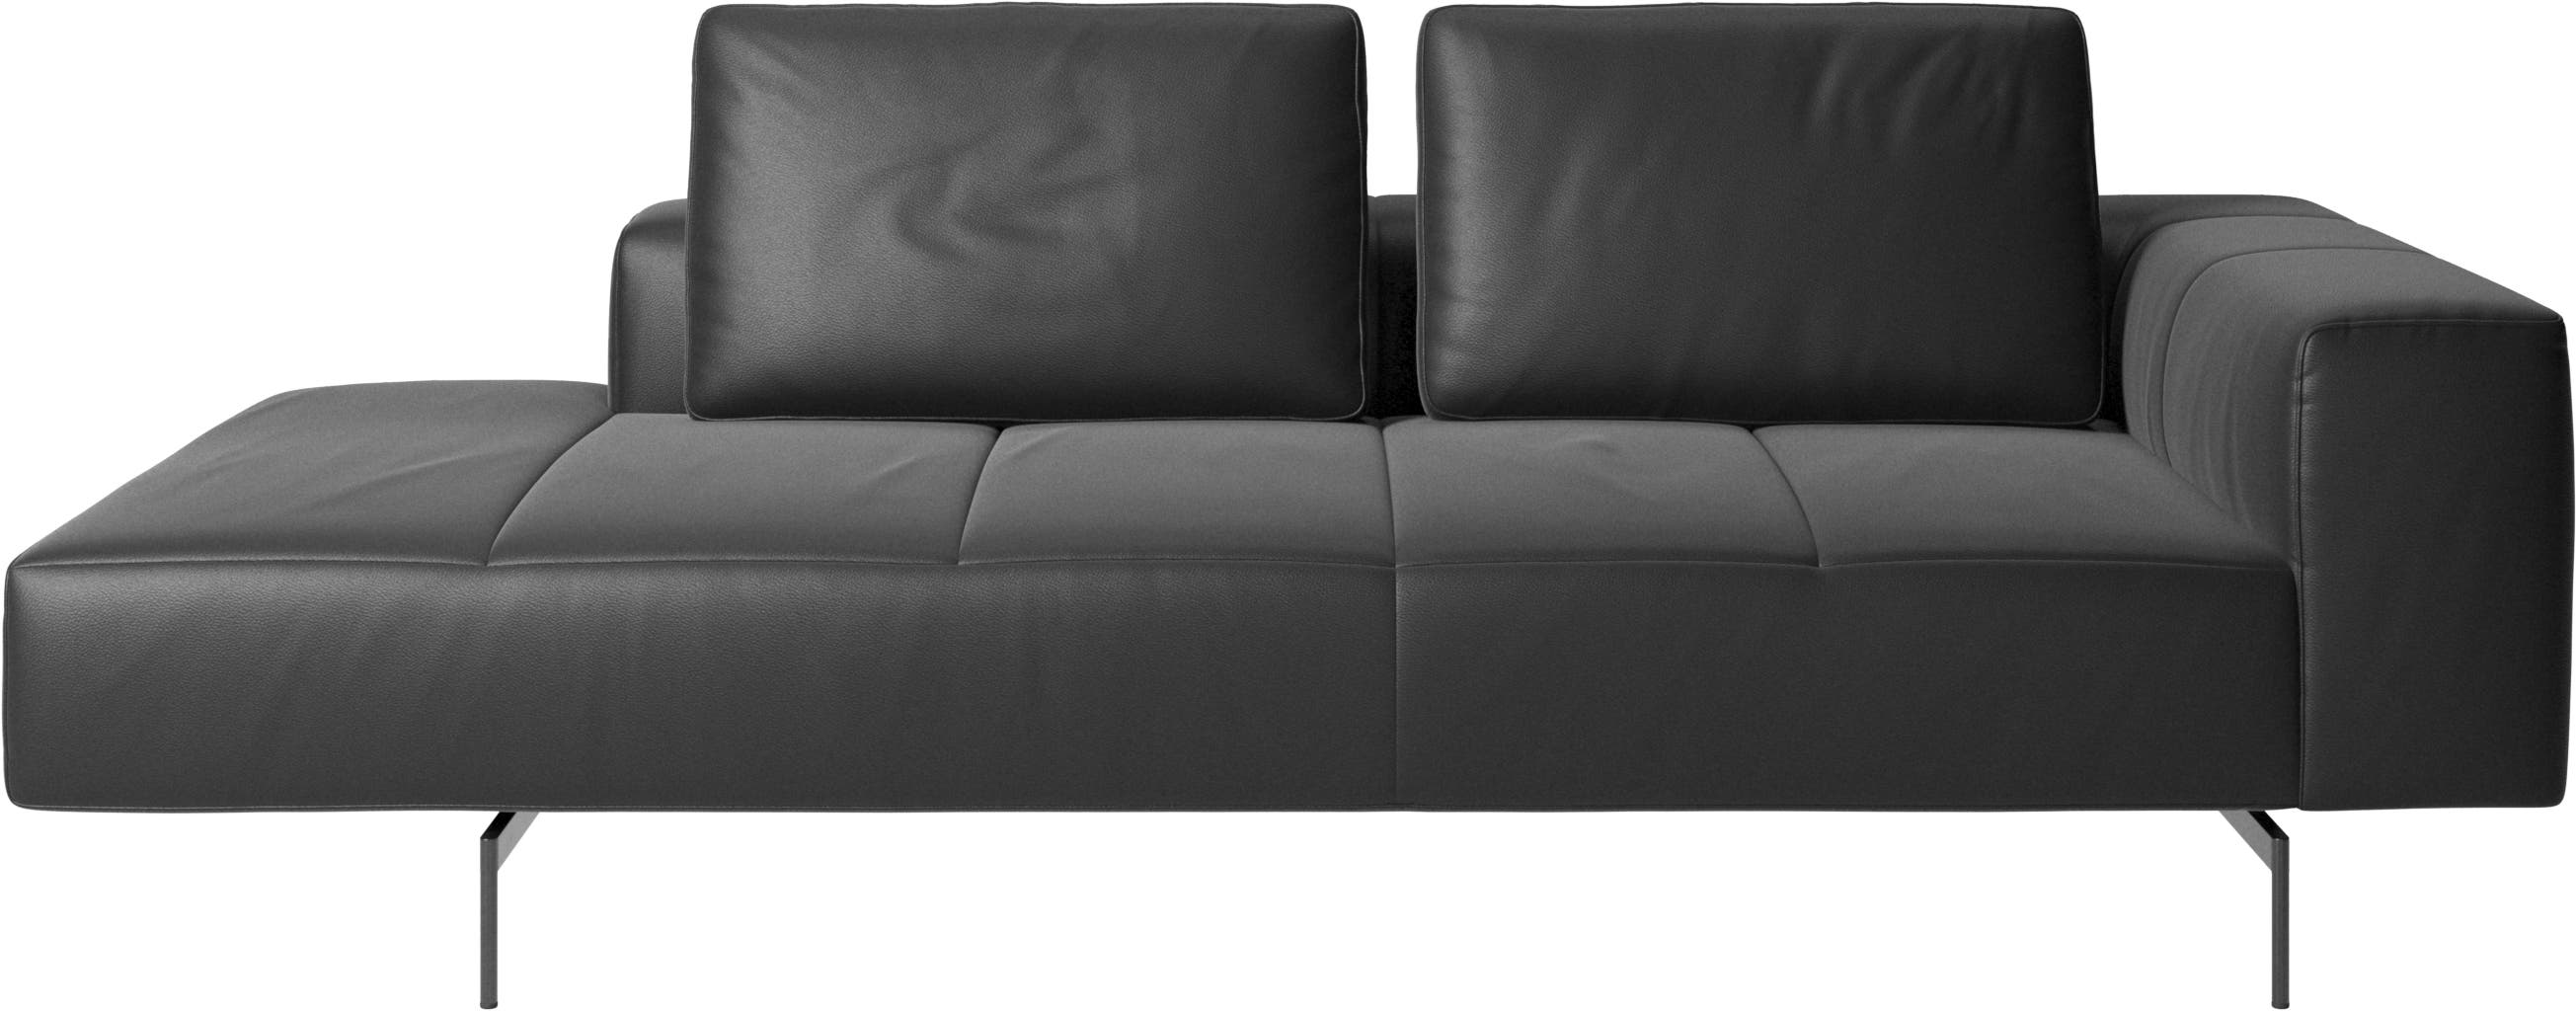 Amsterdam resting module for sofa, armrest right, open end left